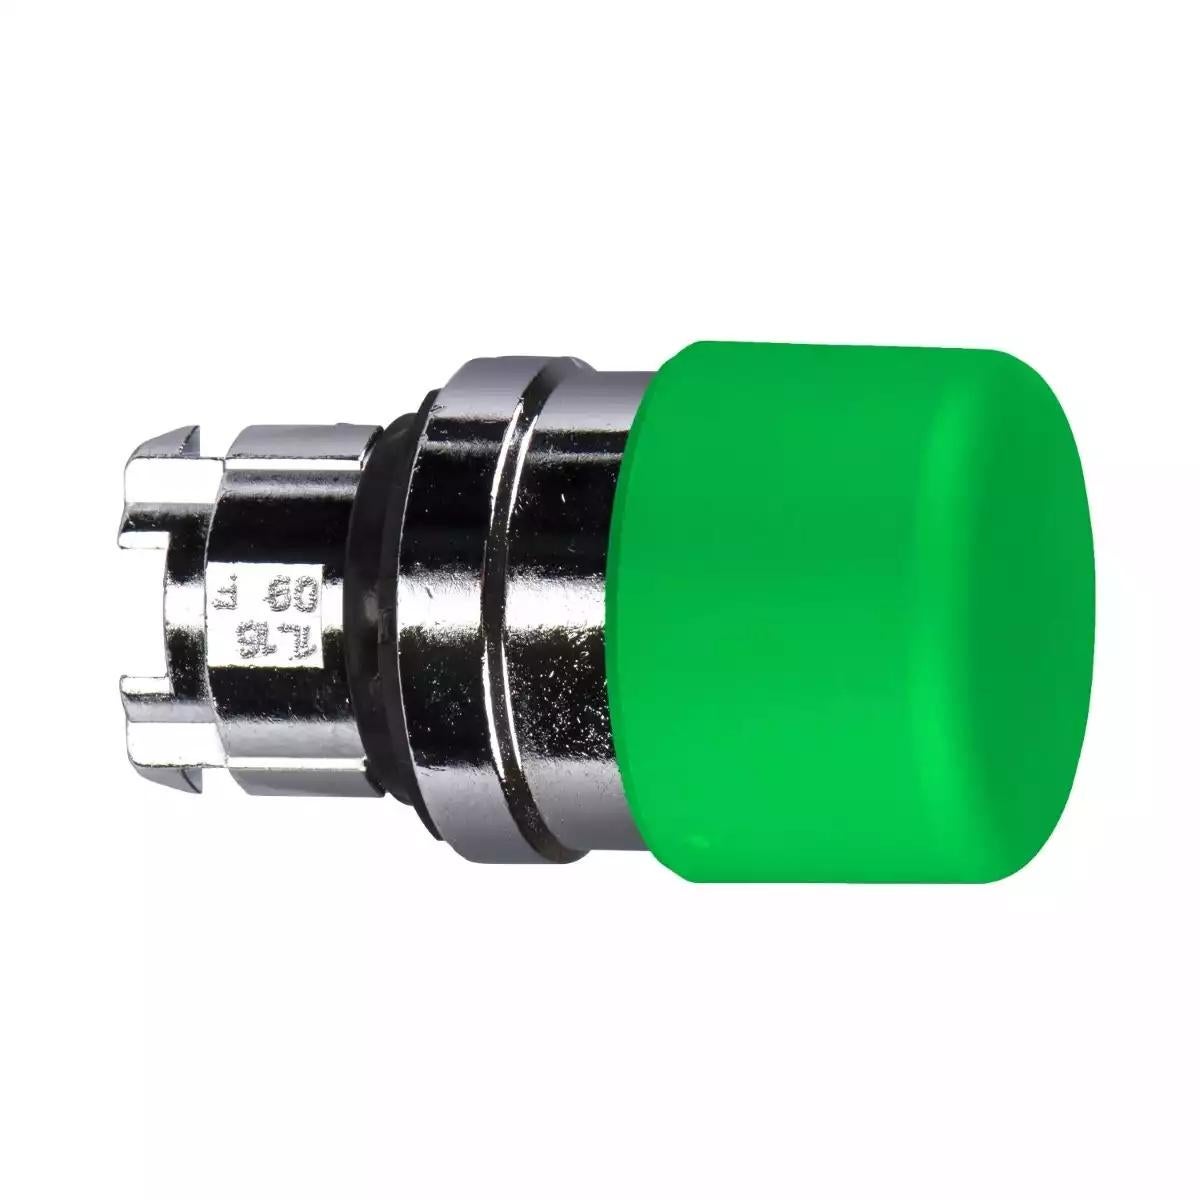 Head for non illuminated push button, Harmony XB4, XB5, green Ø 30 mushroom pushbutton Ø22 mm spring return